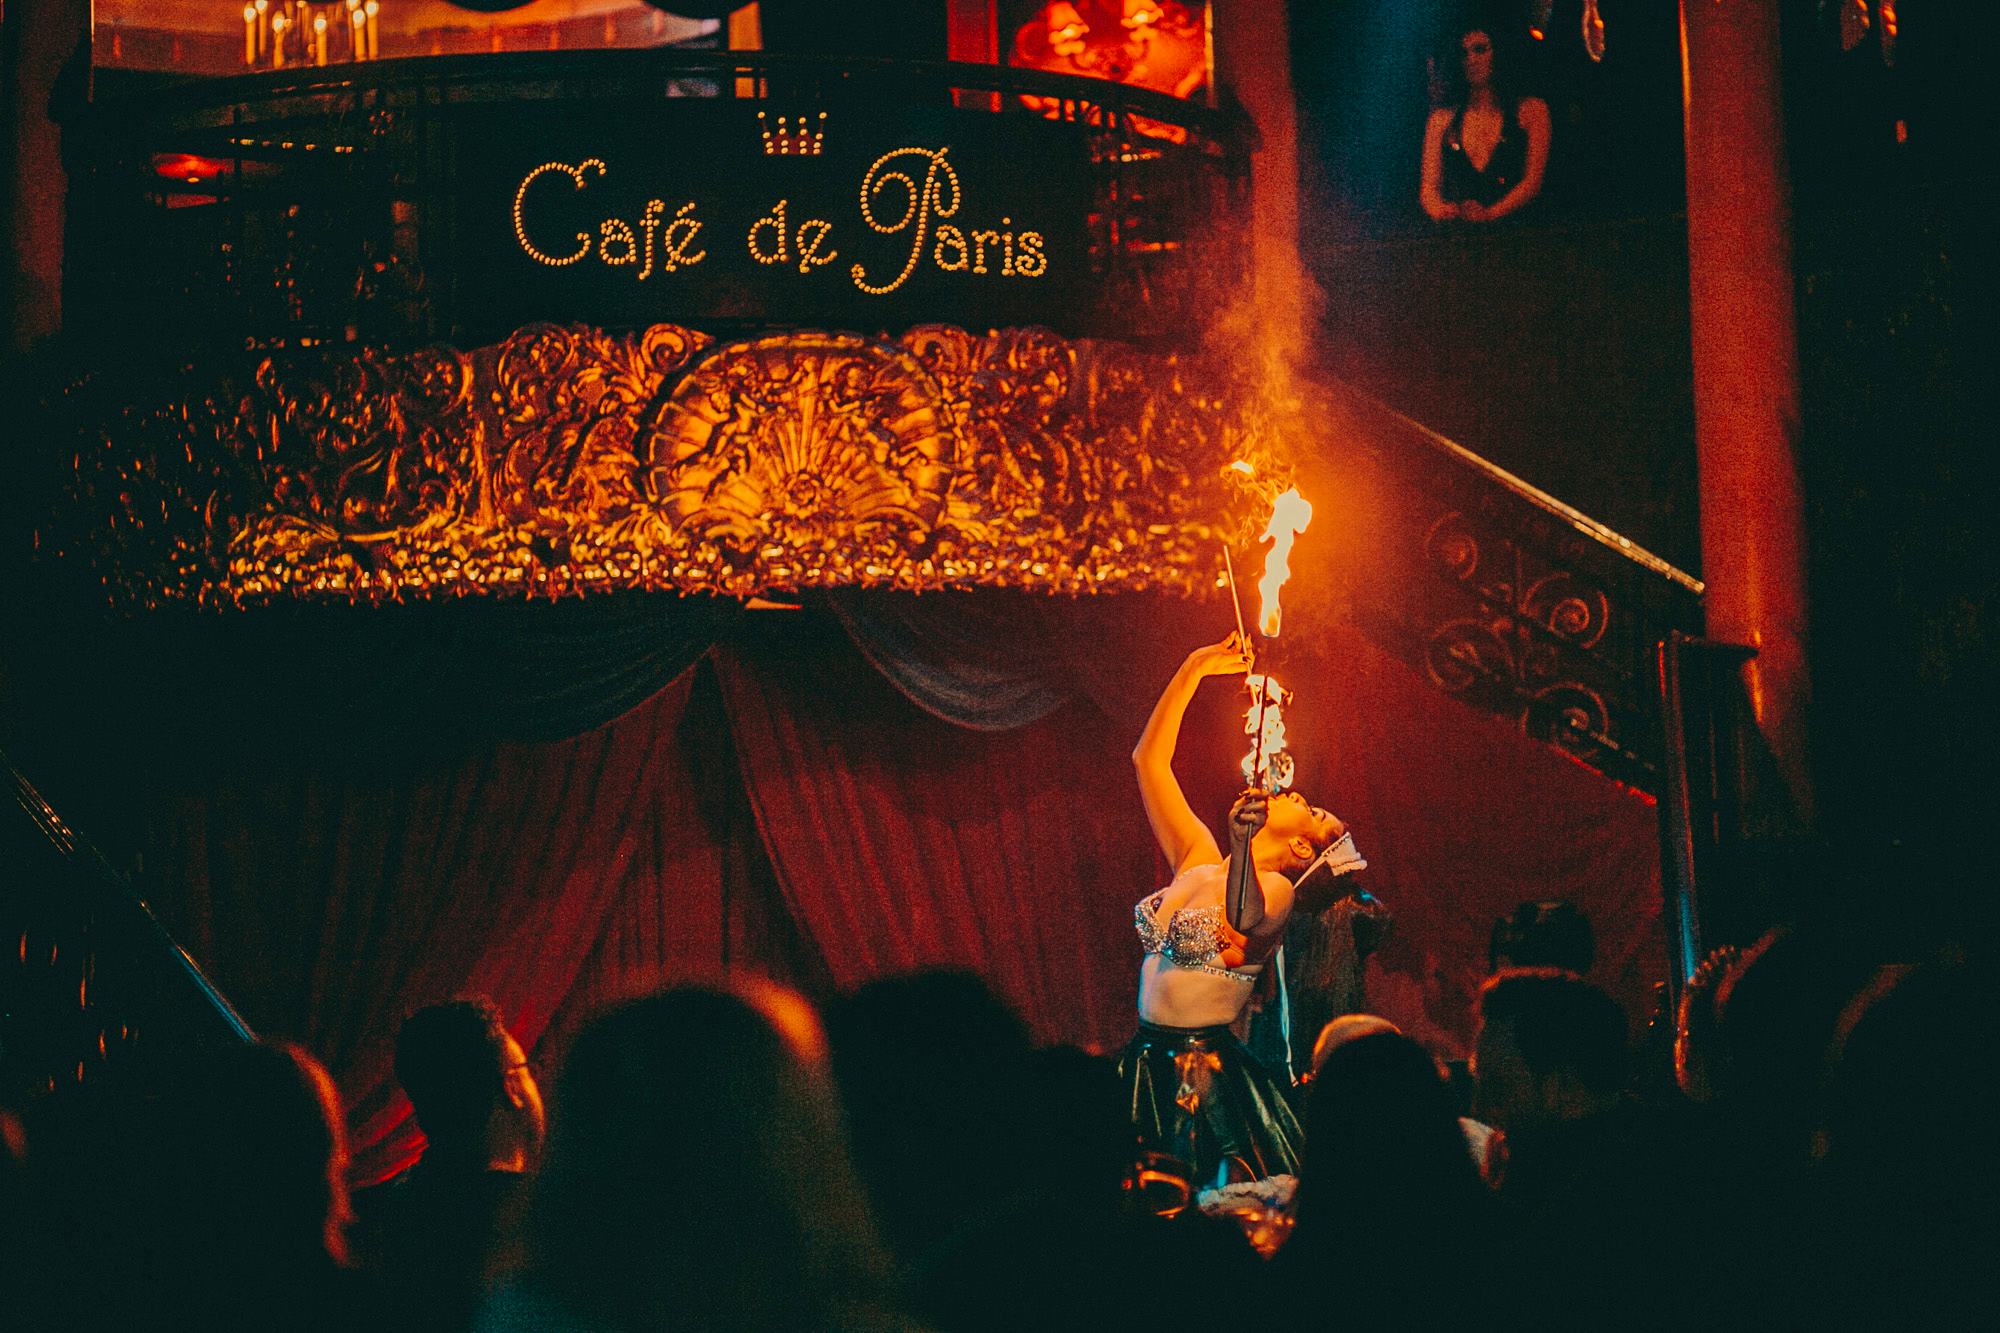 Cafe de Paris The Service show burlesque circus cabaret london venue interiors nightclub fire eater